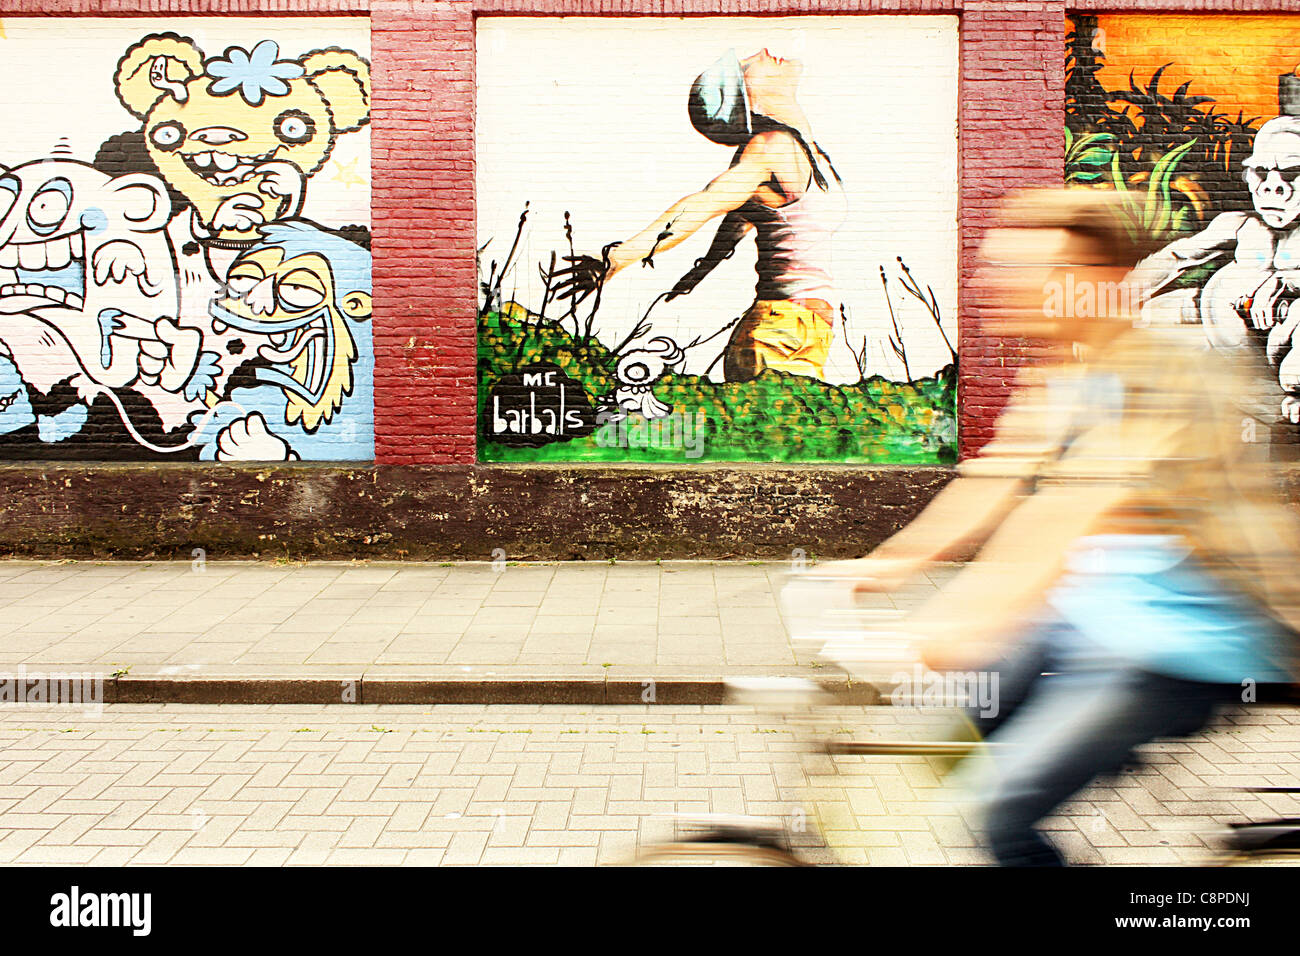 graffiti wall and biker in motion Stock Photo